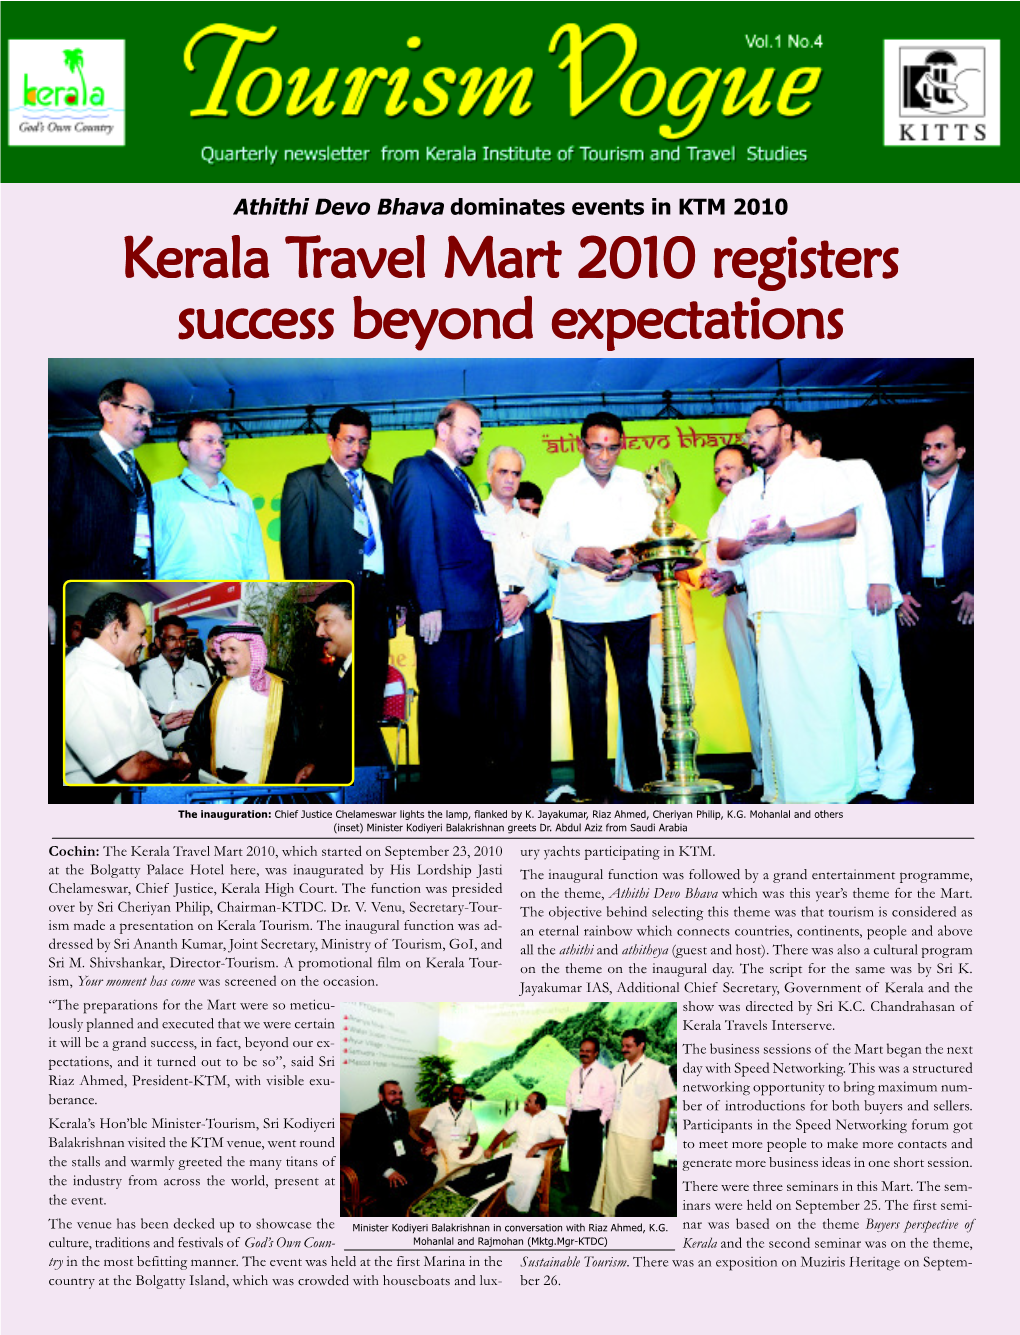 Kerala Travel Mart 2010 Registers Ravel Mart 2010 Registers Success Beyond E Success Beyond Expectations Xpectations